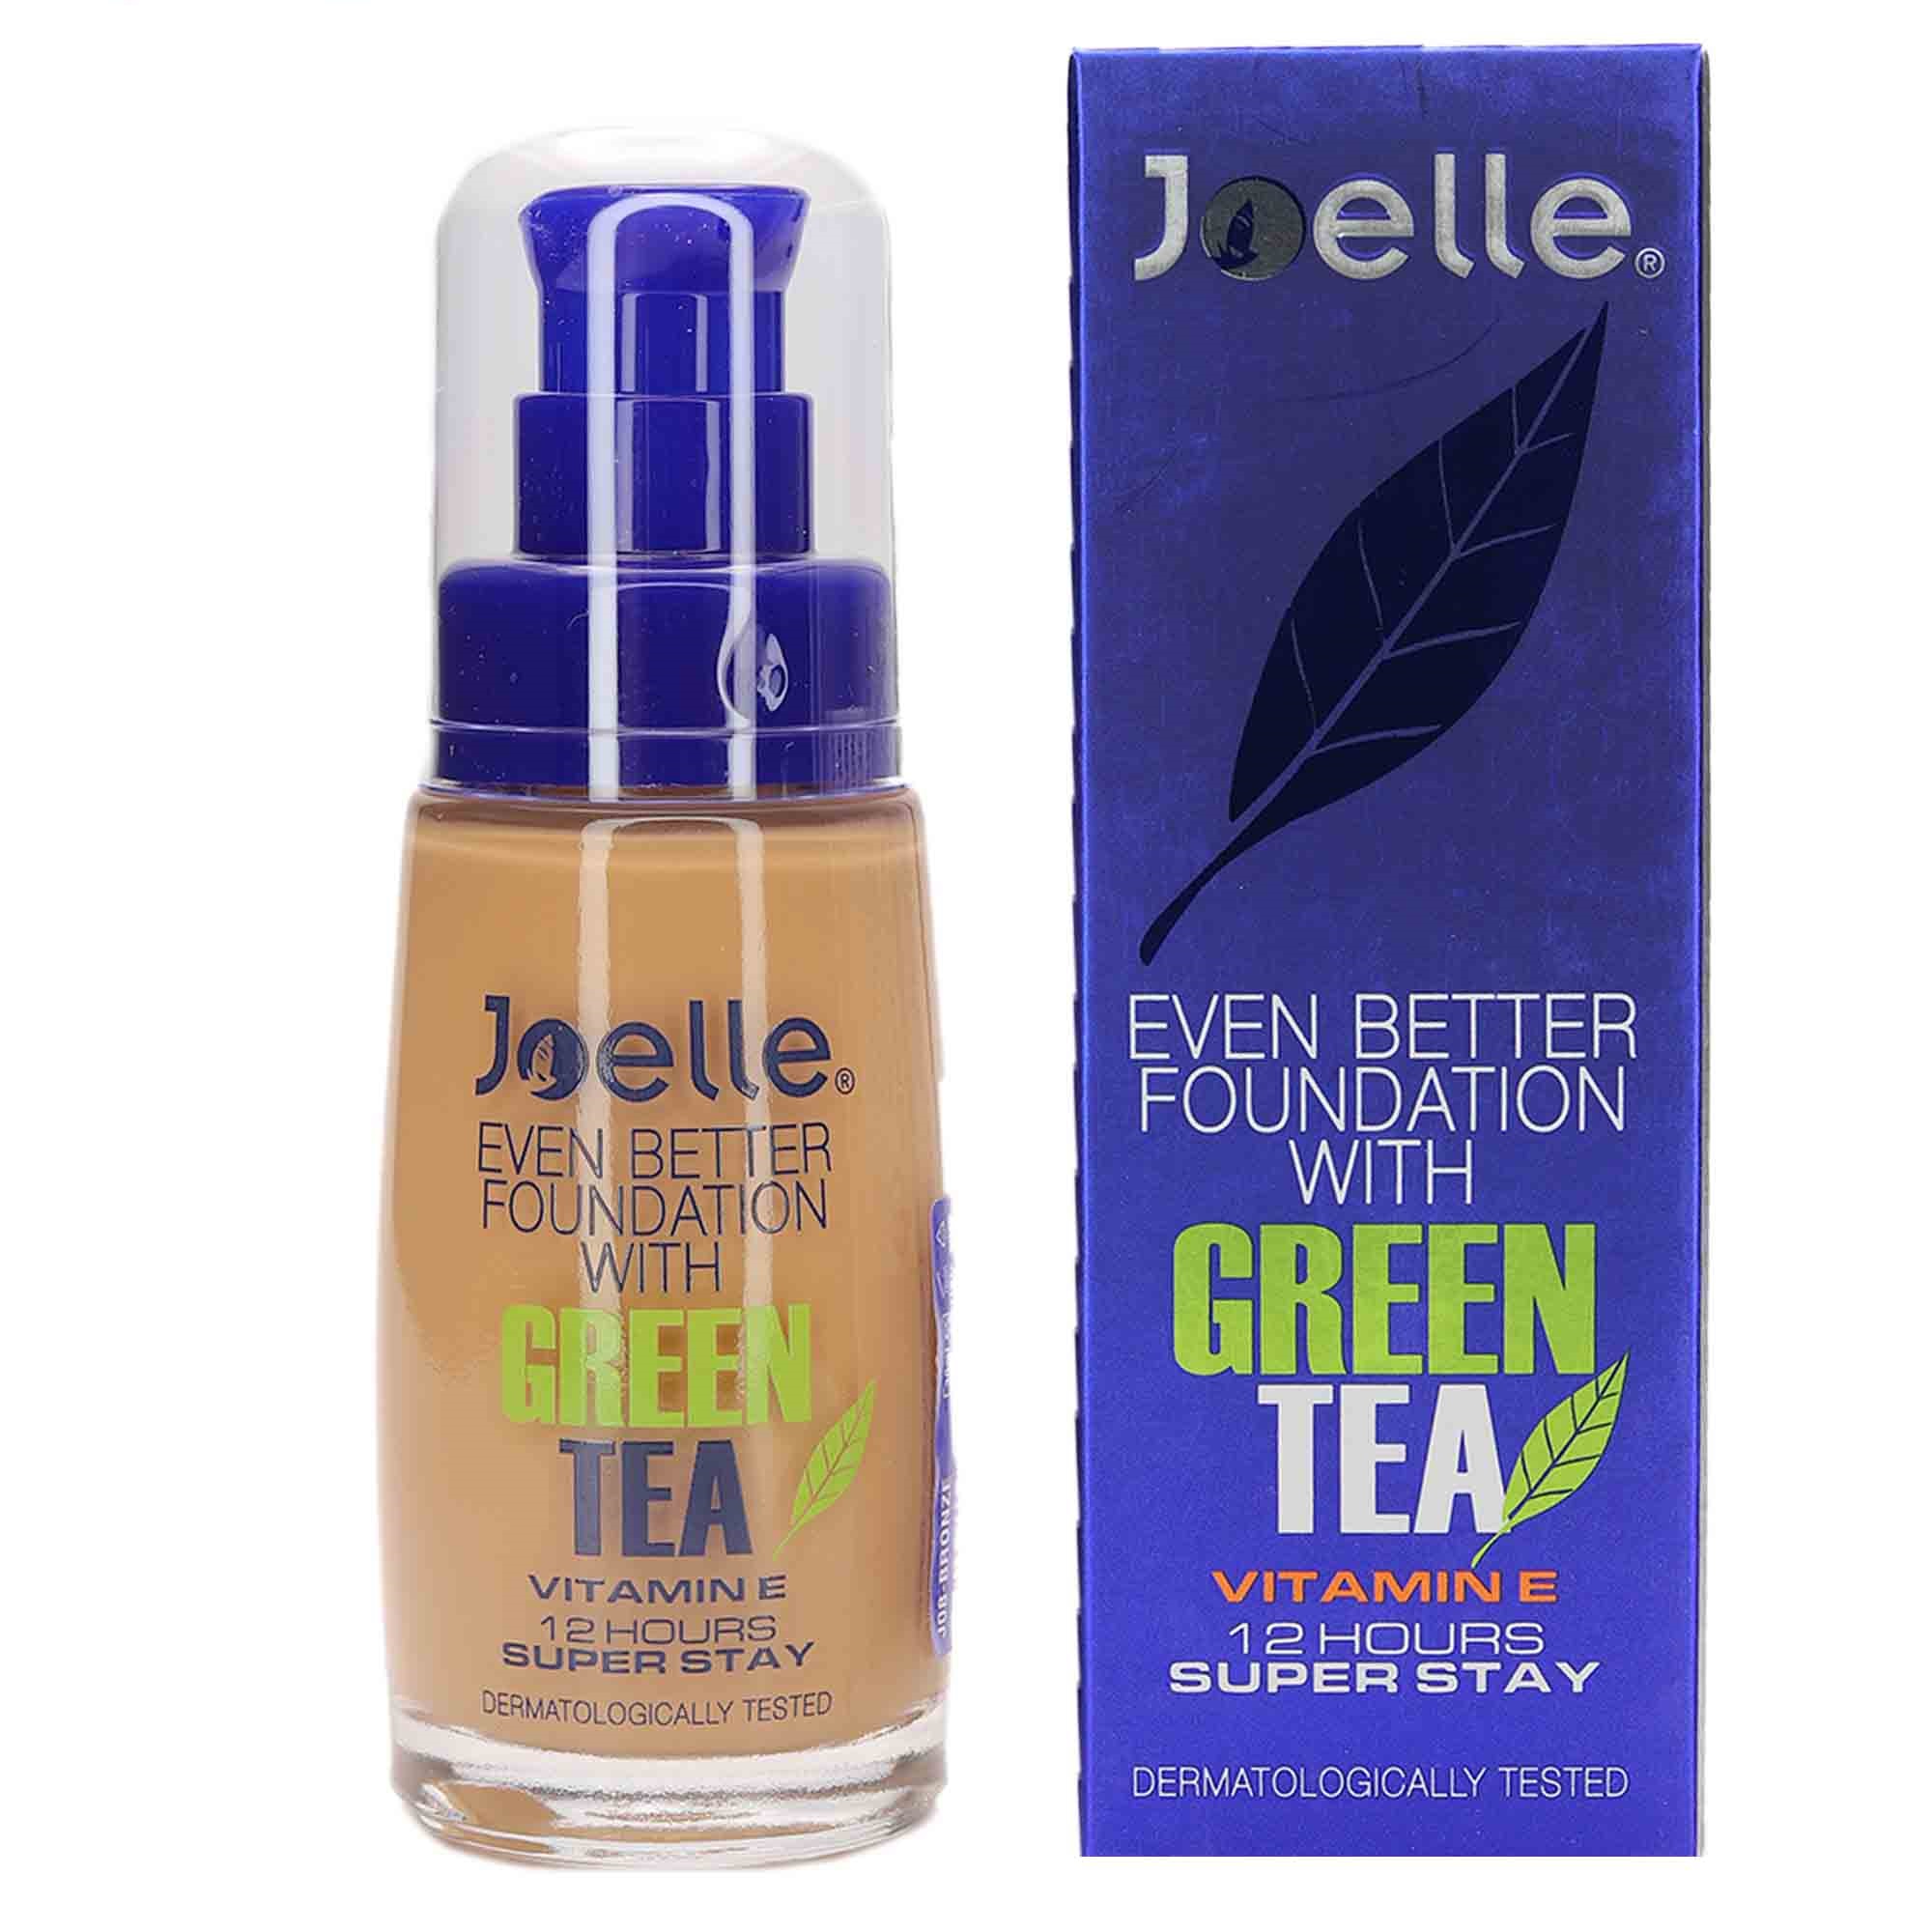 Joel 08 bronze powder cream with green tea extract - Joelle